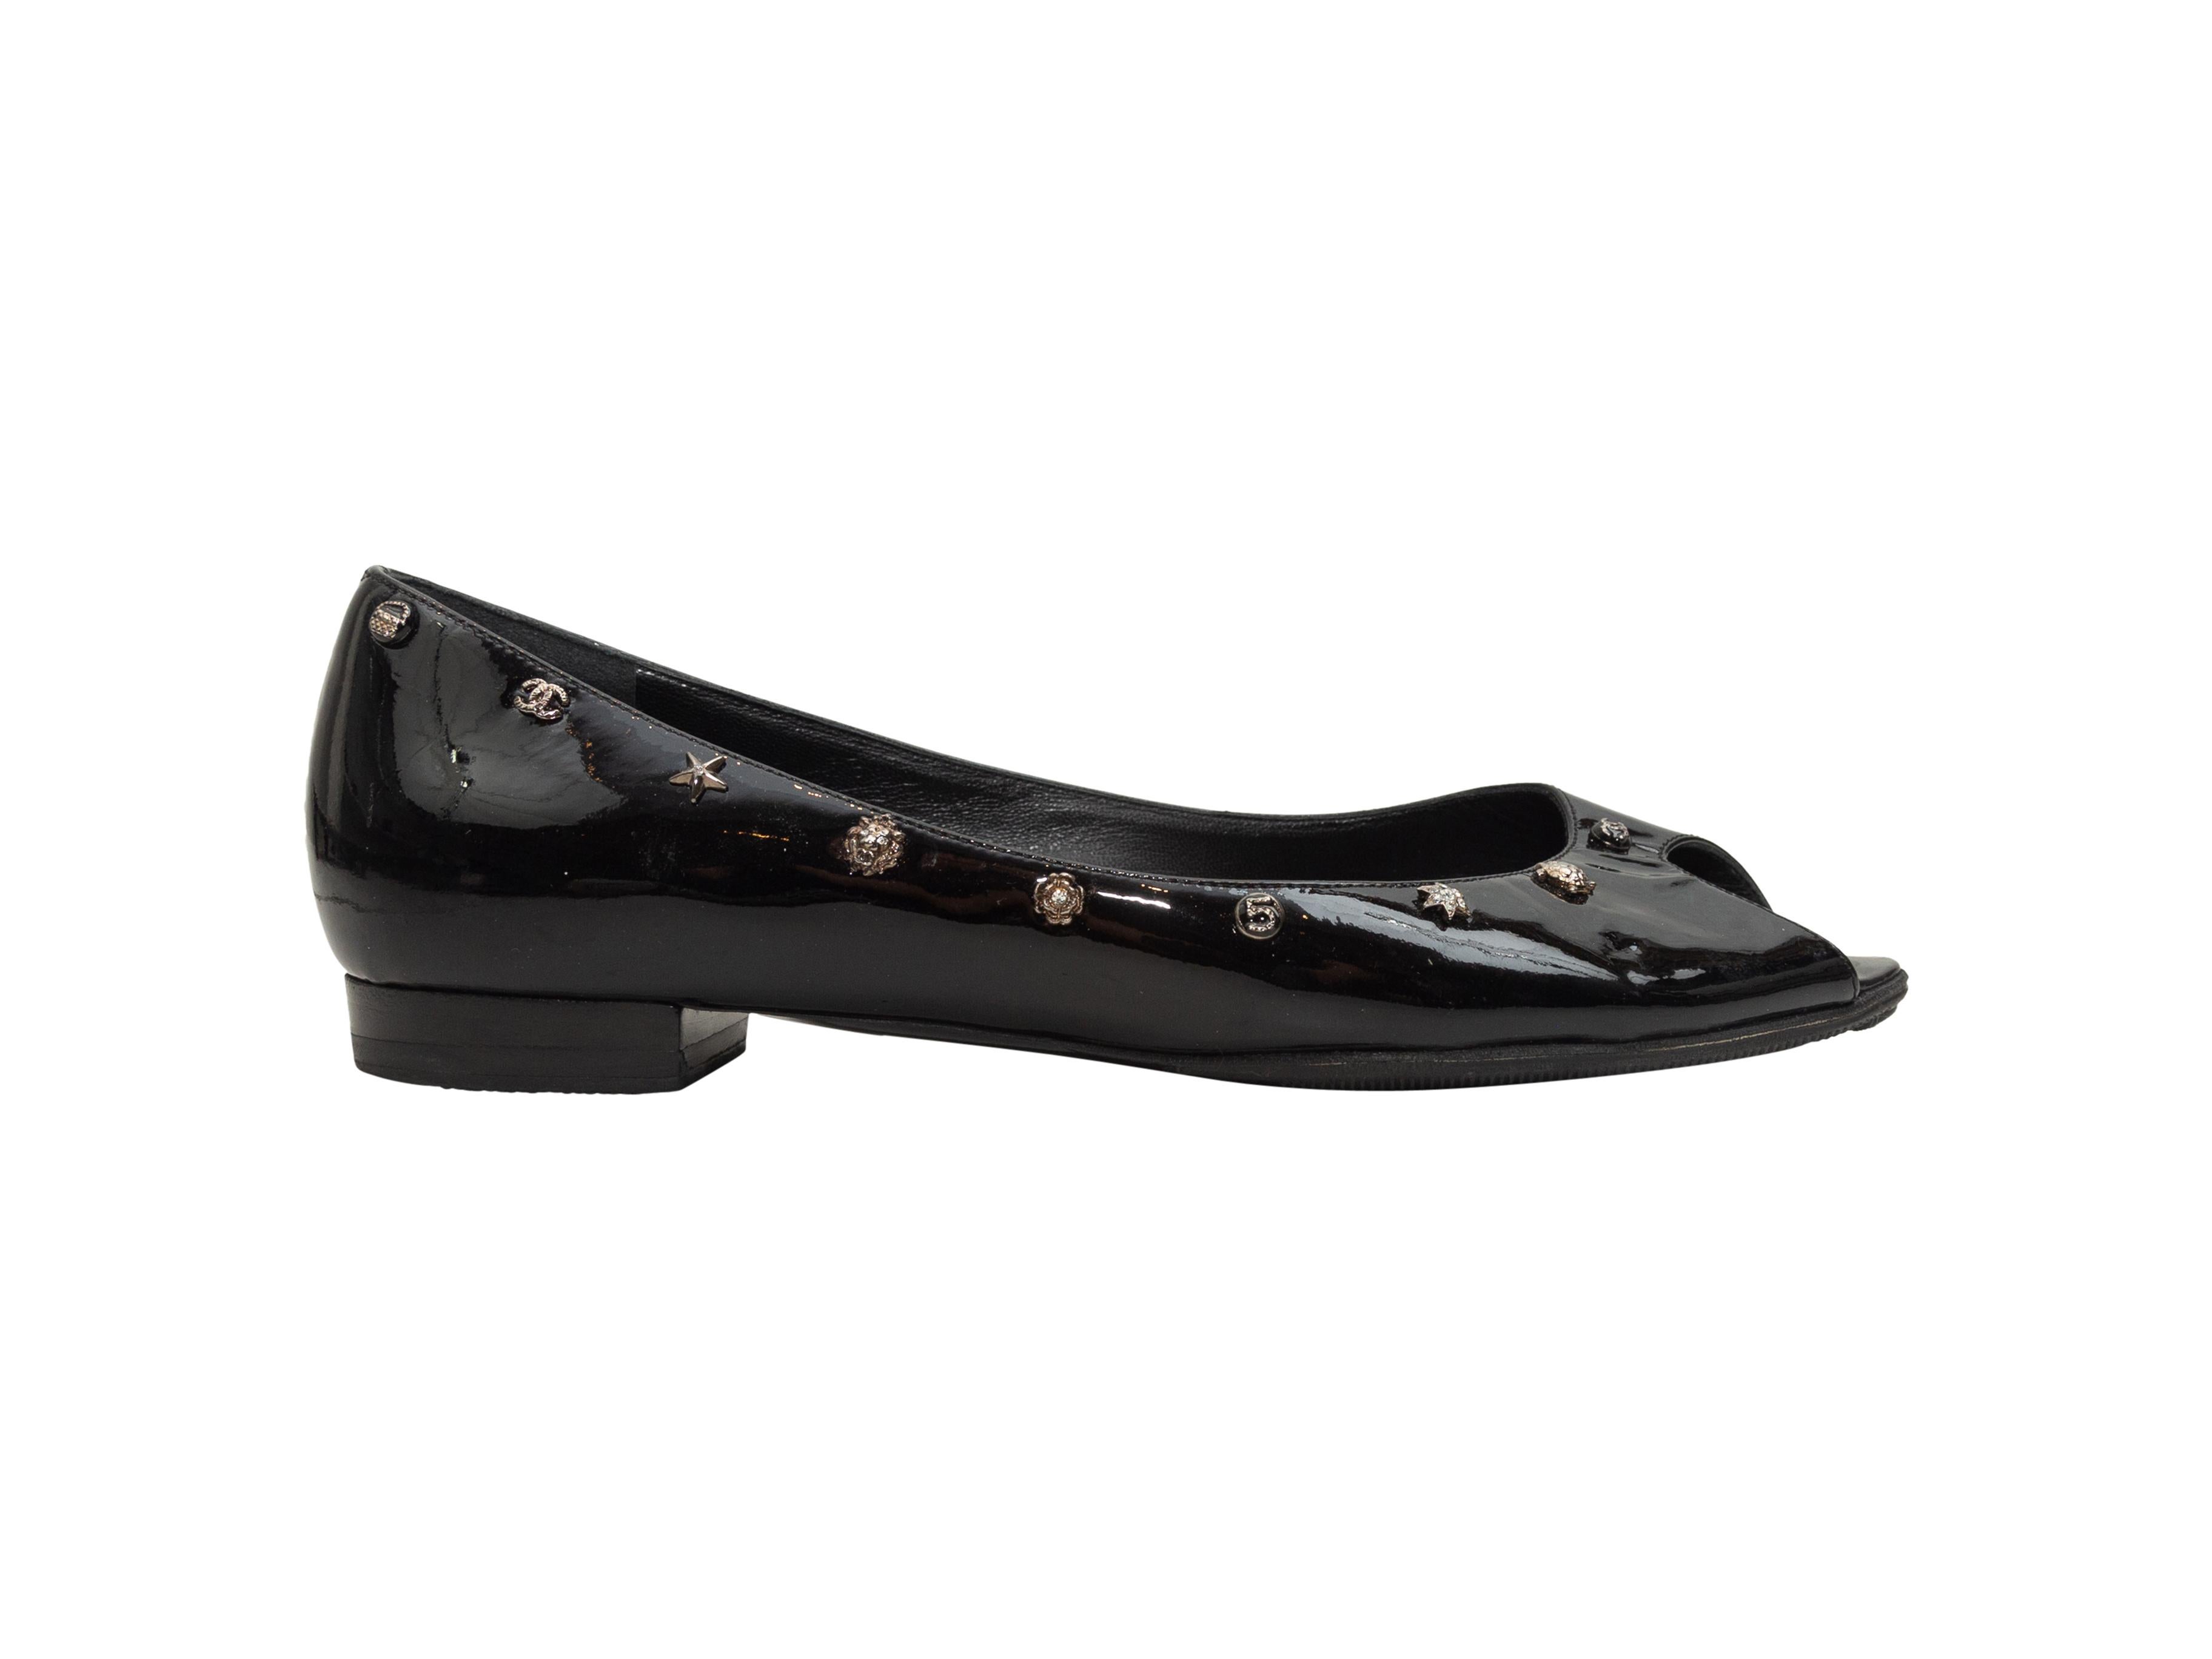 Women's Chanel Black Patent Leather Peep-Toe Flats